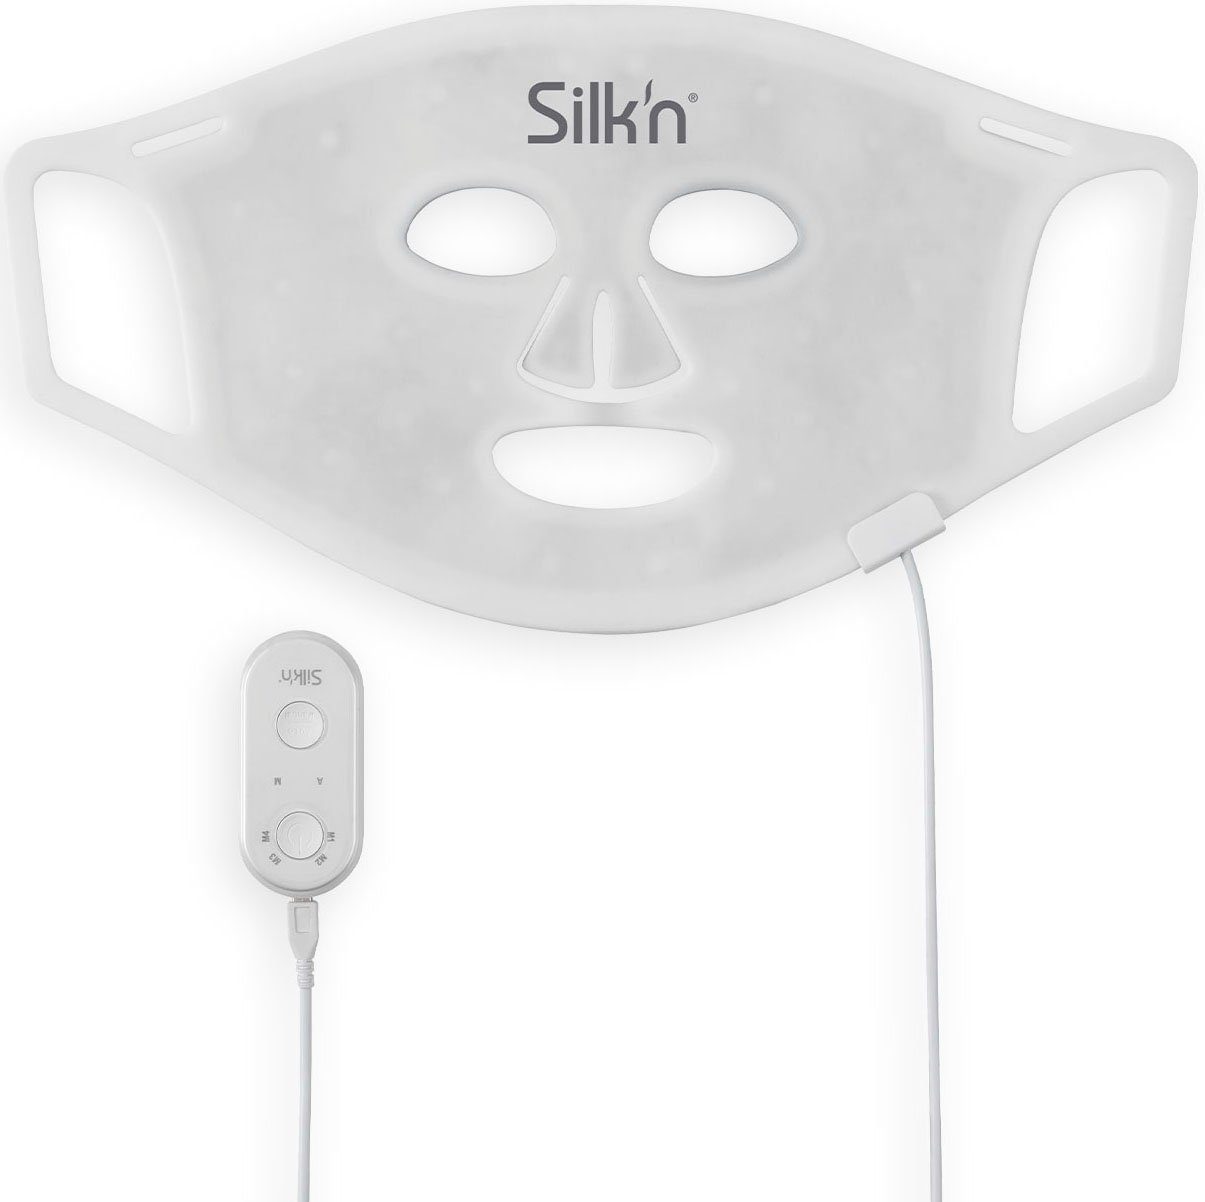 Silk'n Kosmetikbehandlungsgerät LED Face Mask LED Lichtfarben mit 100, 4 Gesichtsmaske